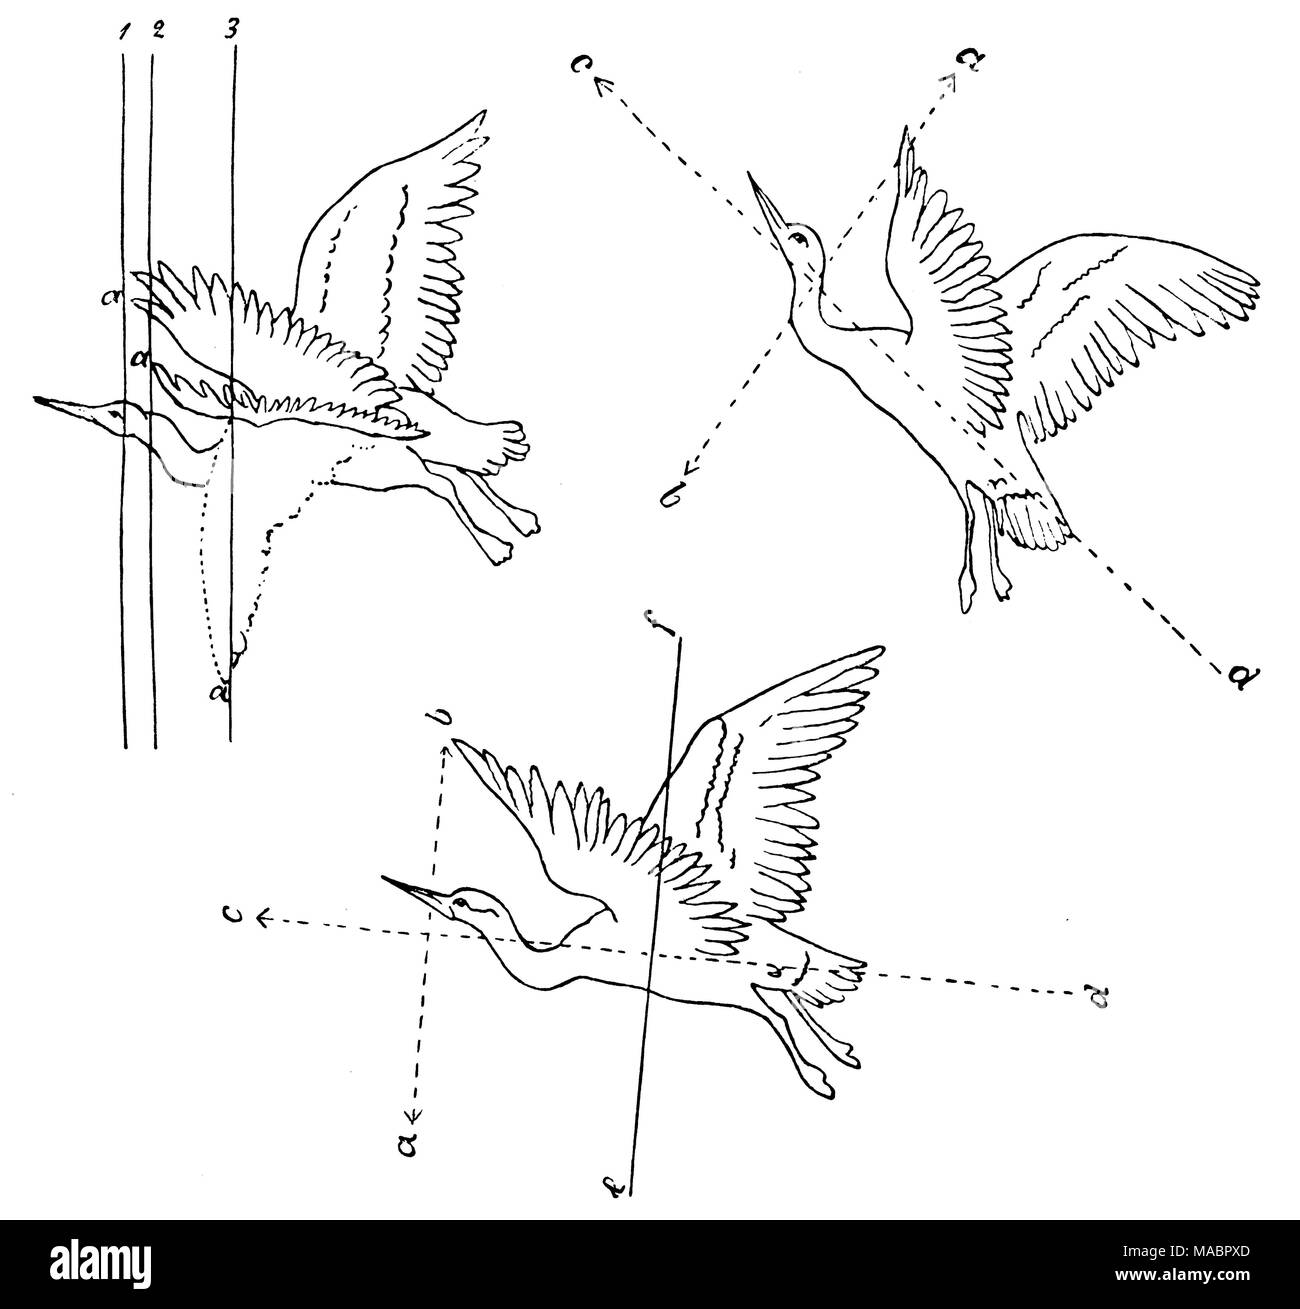 Sketches of Leonardo da Vinci: bird flight Stock Photo